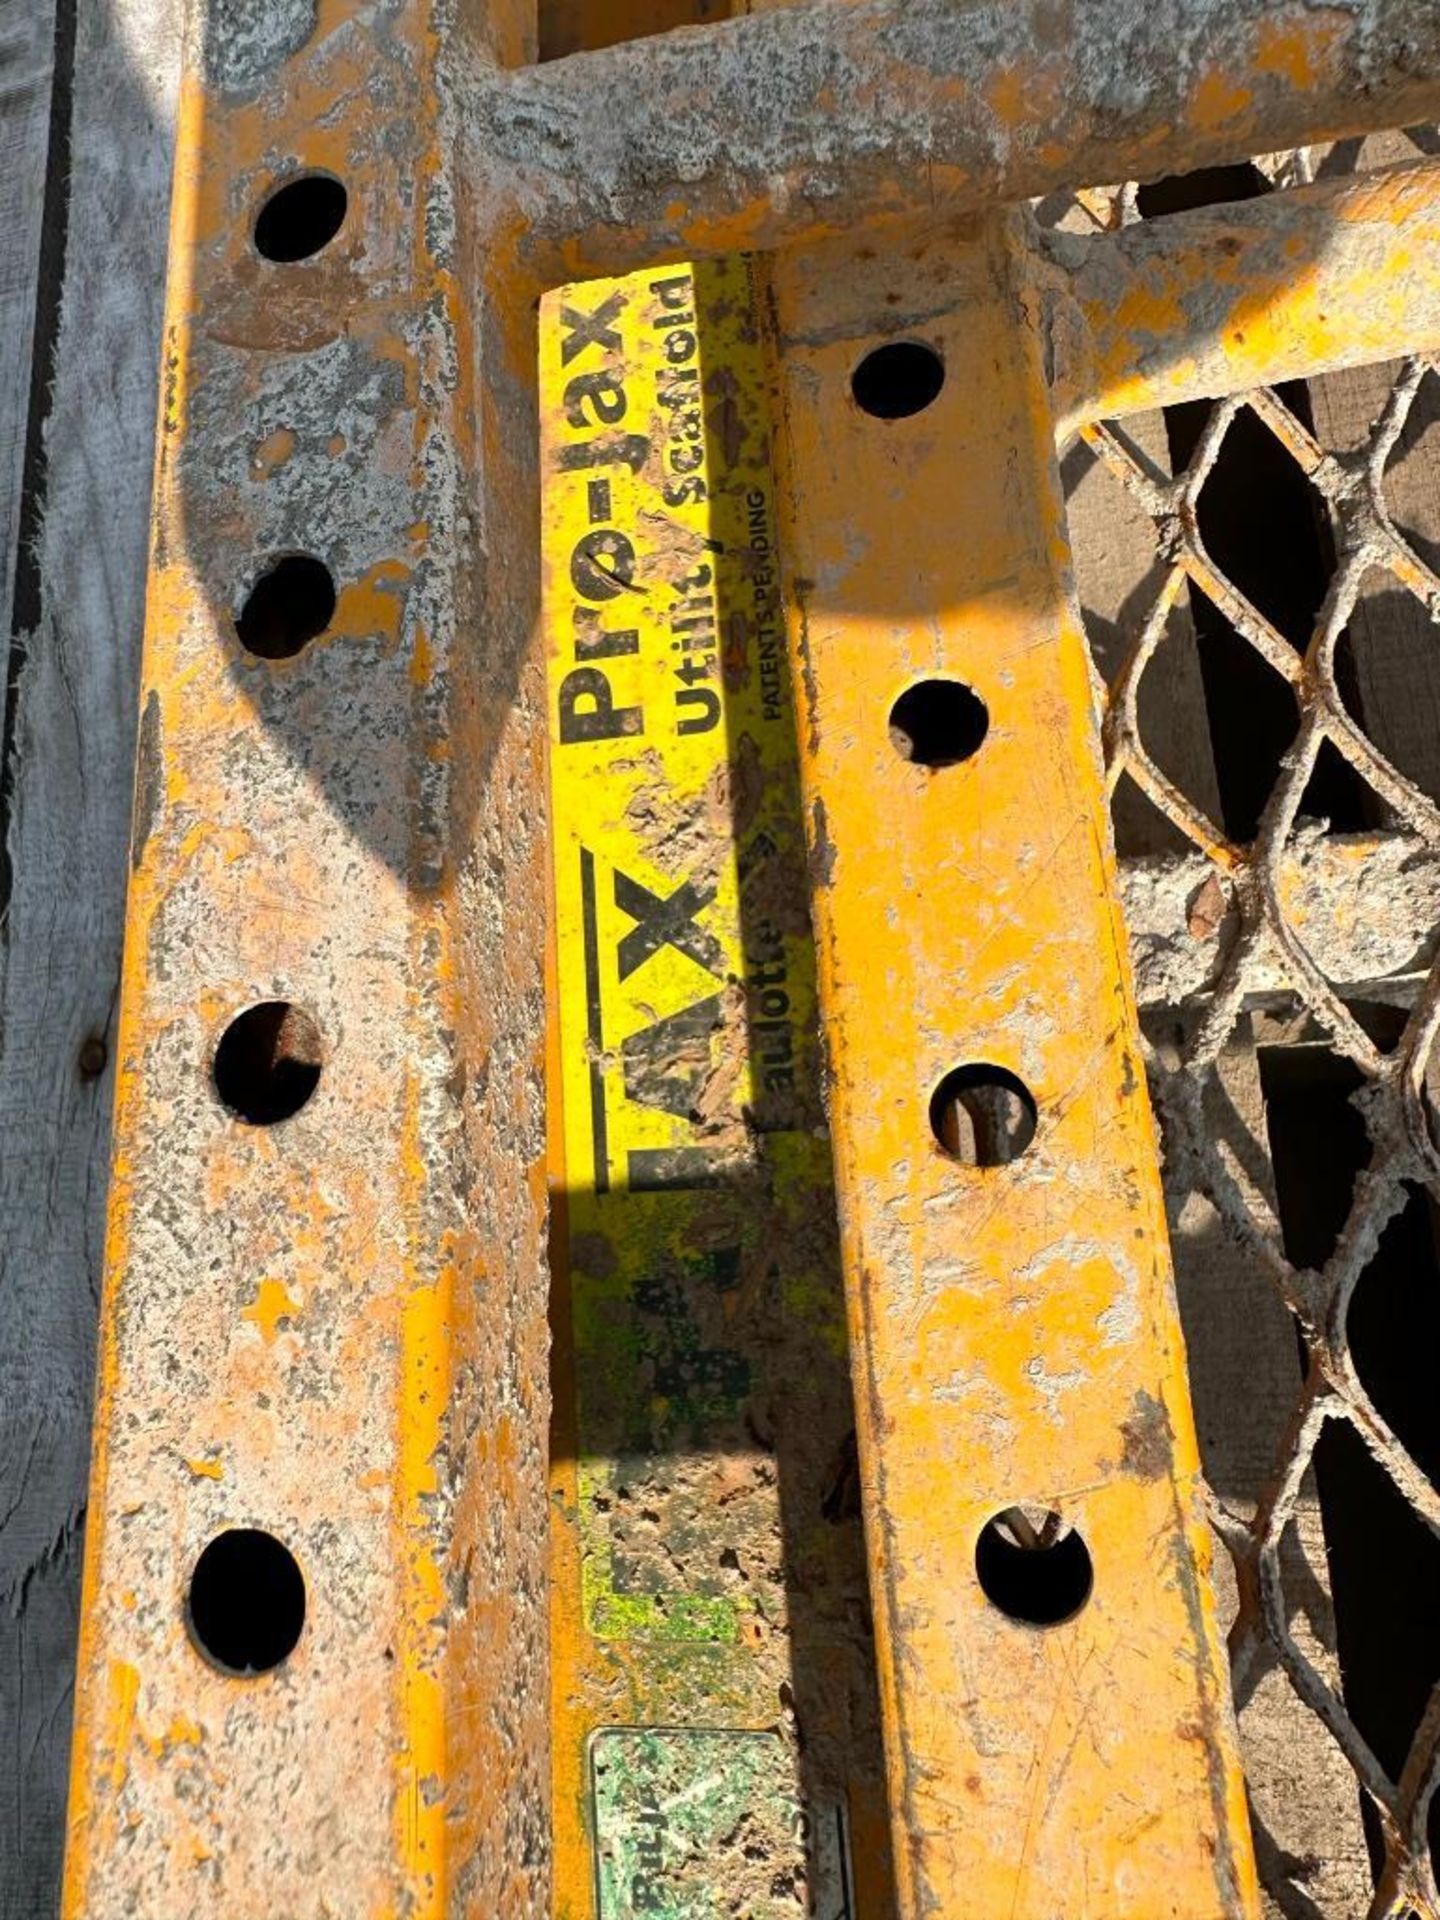 Bil-Jax 6' steel rolling scaffolding, located in Mt. Pleasant, IA. - Image 3 of 3